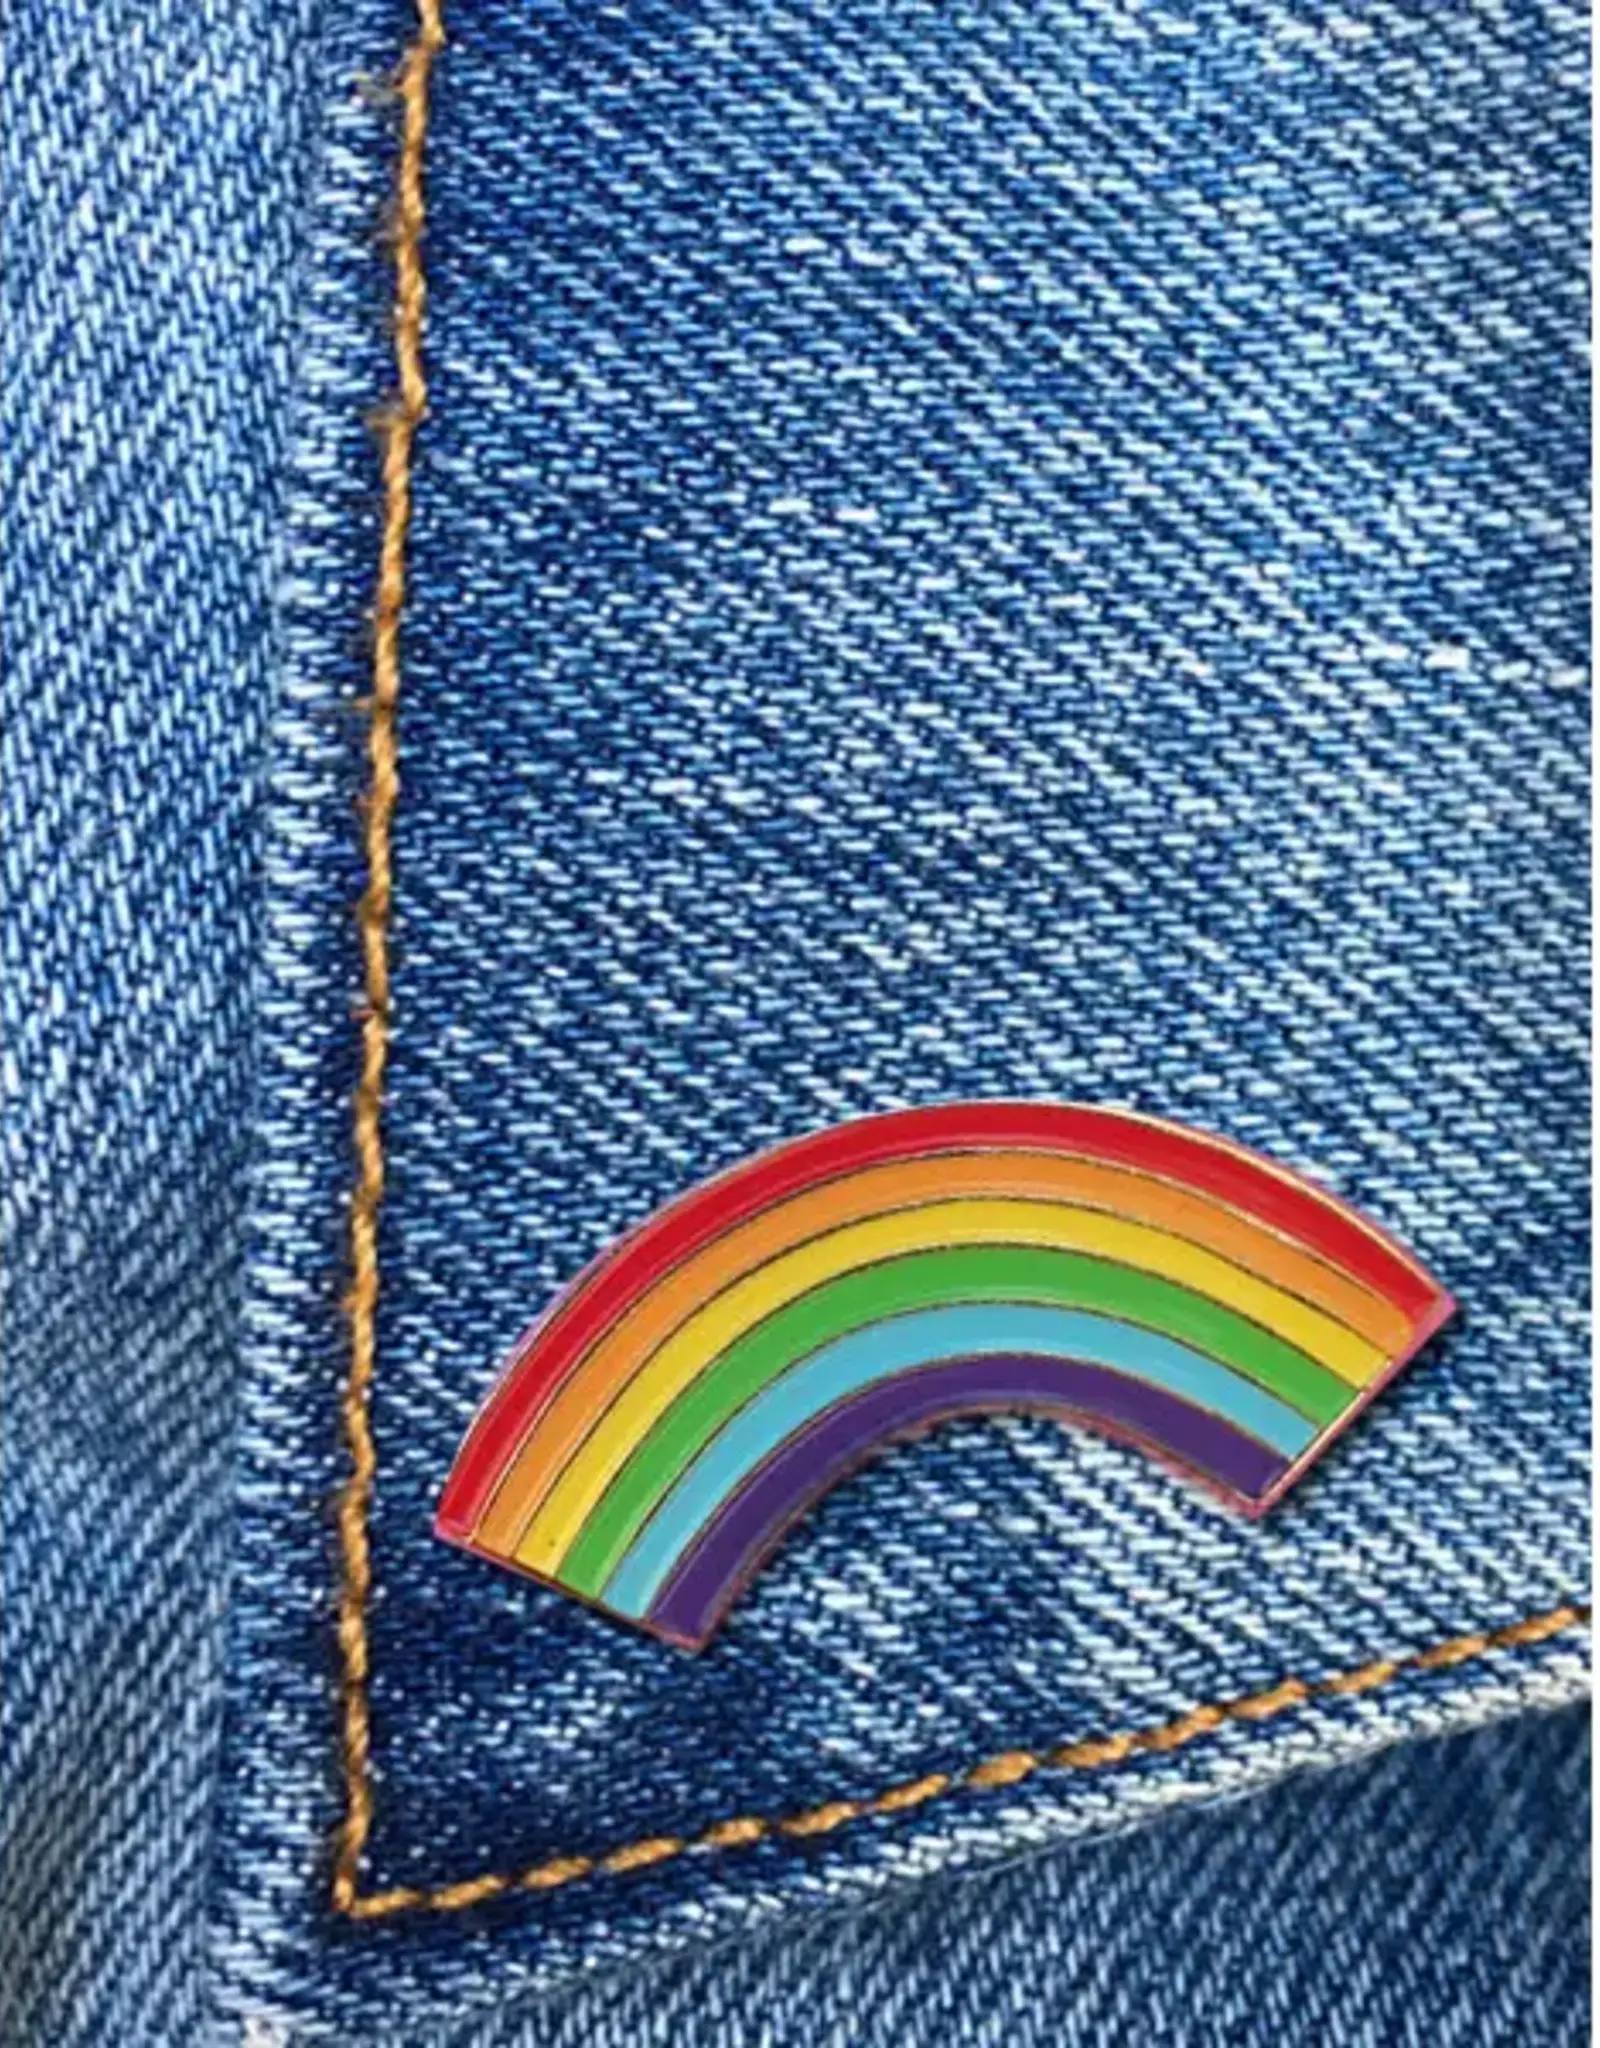 The Found Enamel Pin: Rainbow